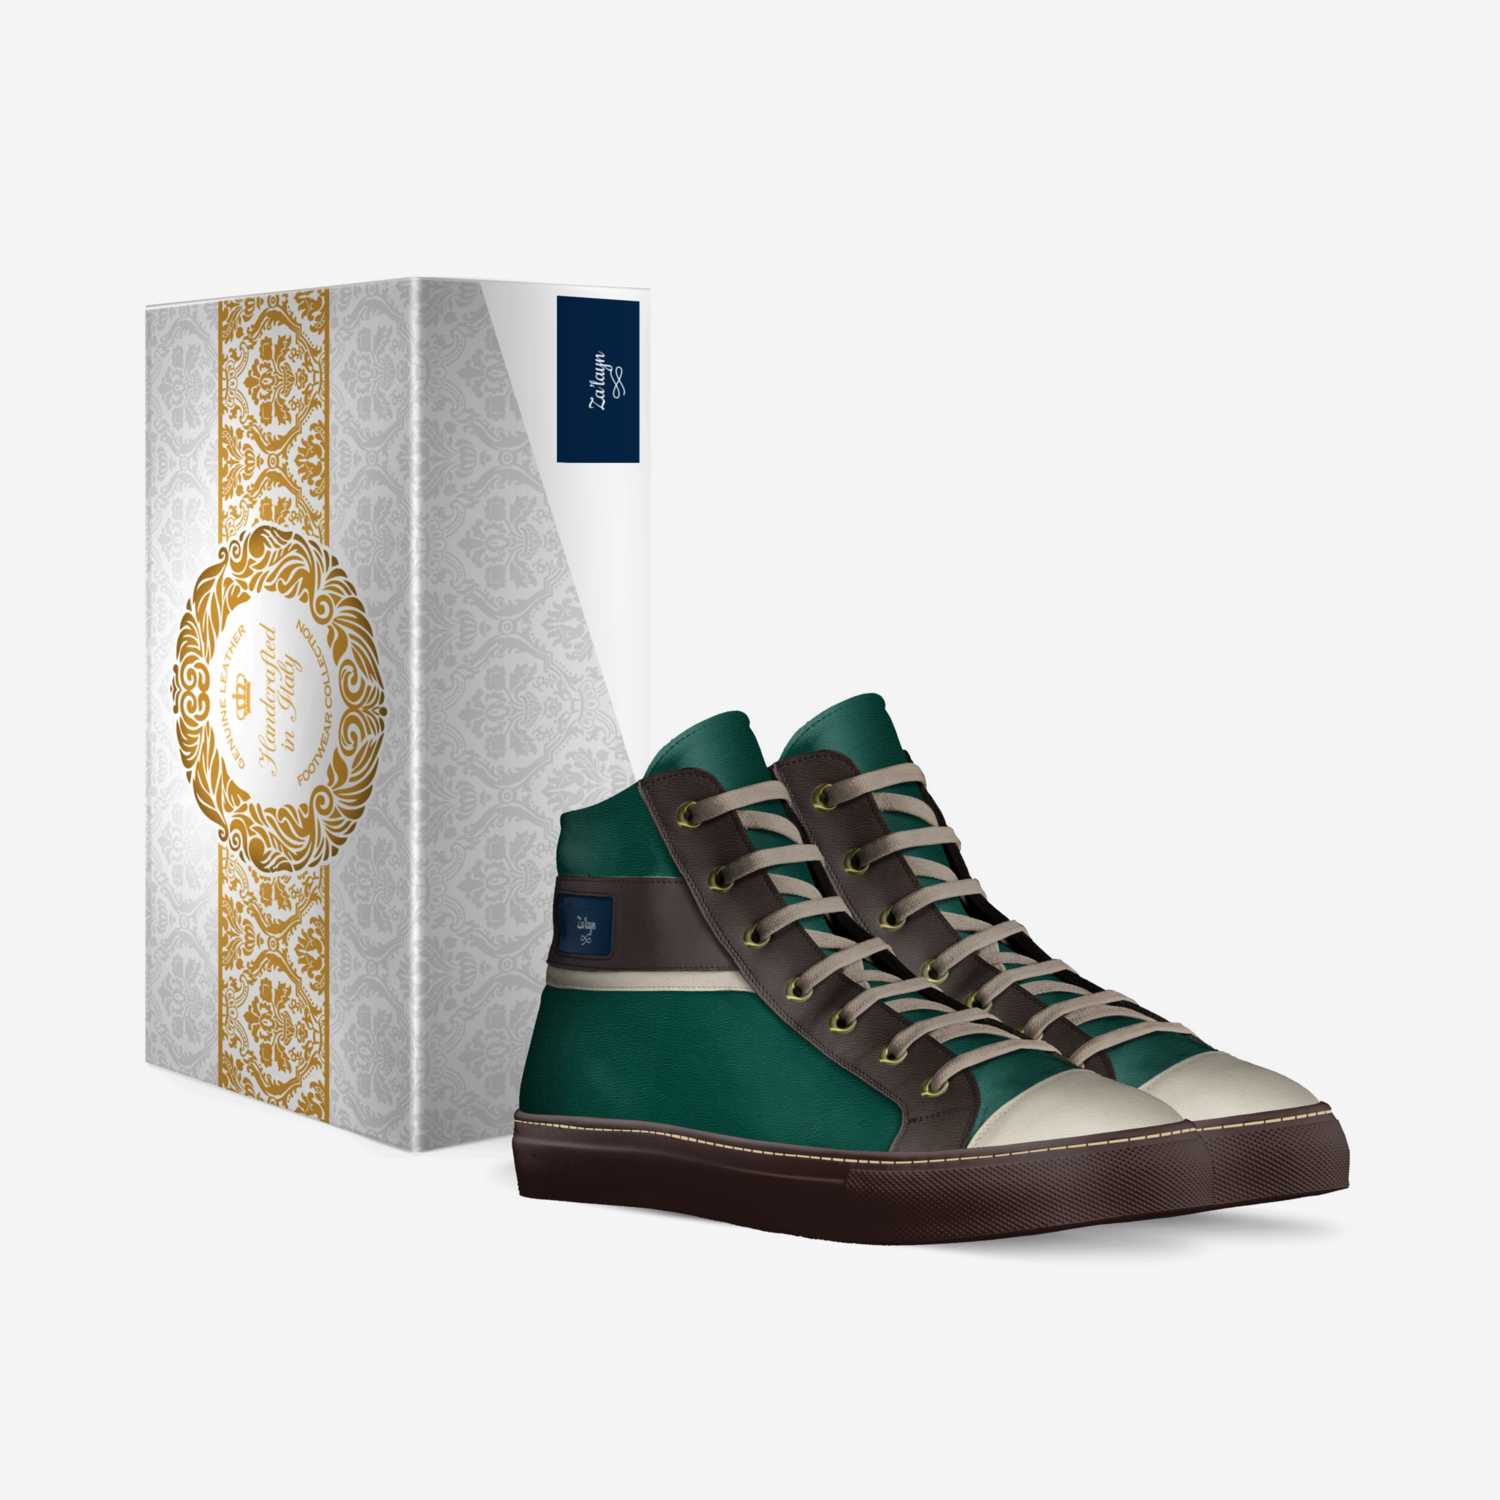 Za'layn custom made in Italy shoes by Alayna Johnson | Box view